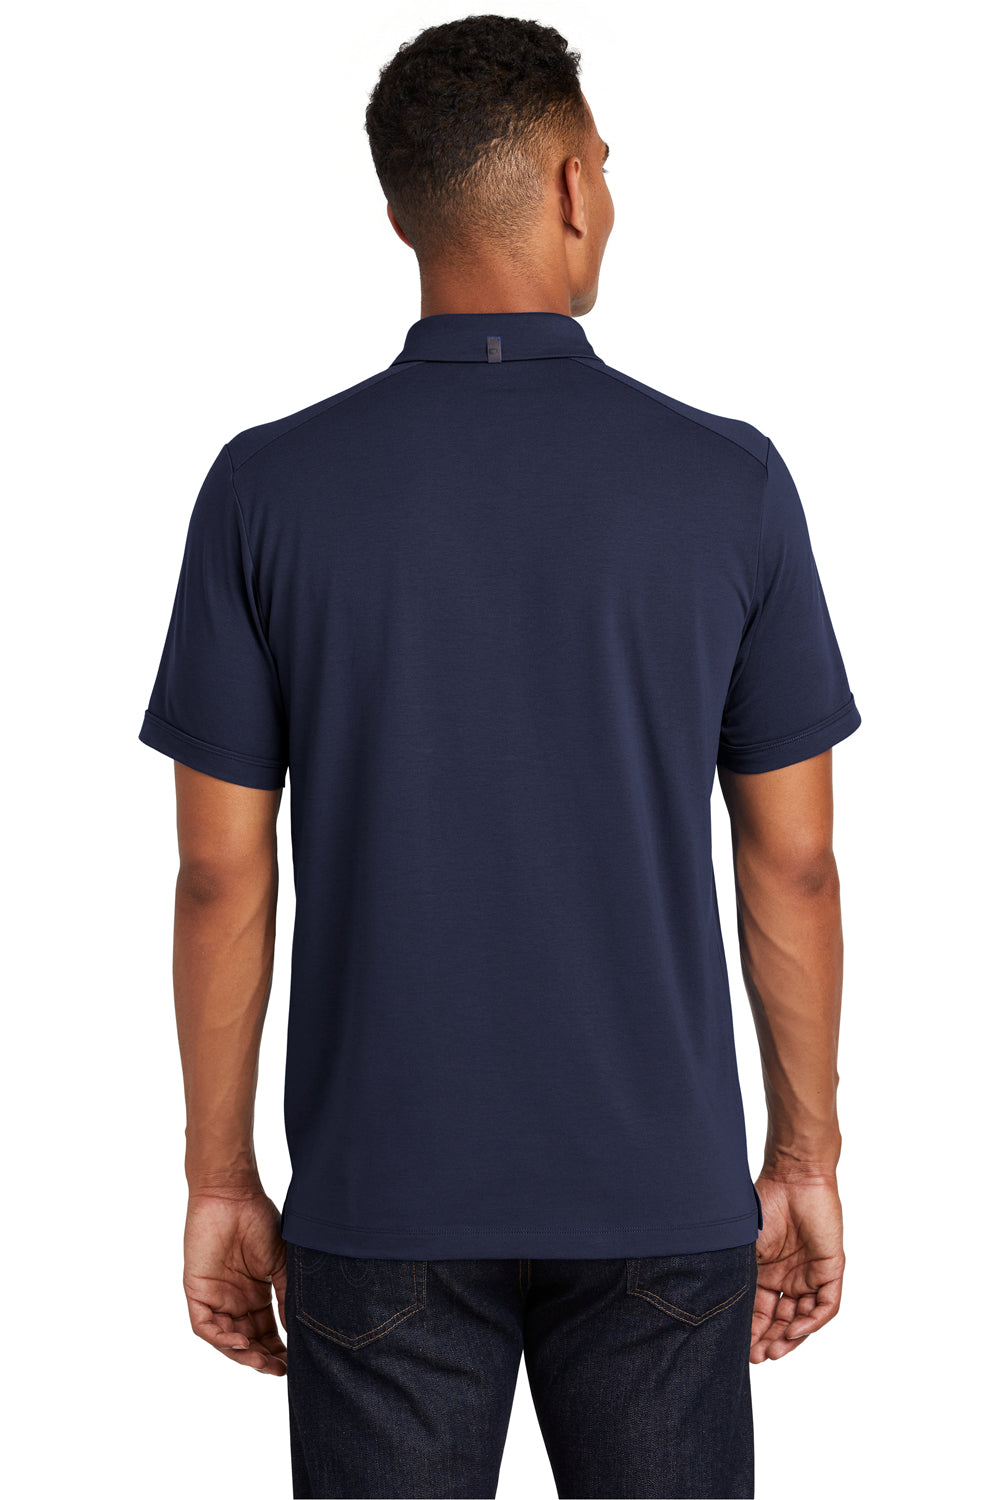 Ogio OG138 Mens Limit Moisture Wicking Short Sleeve Polo Shirt Navy Blue Back